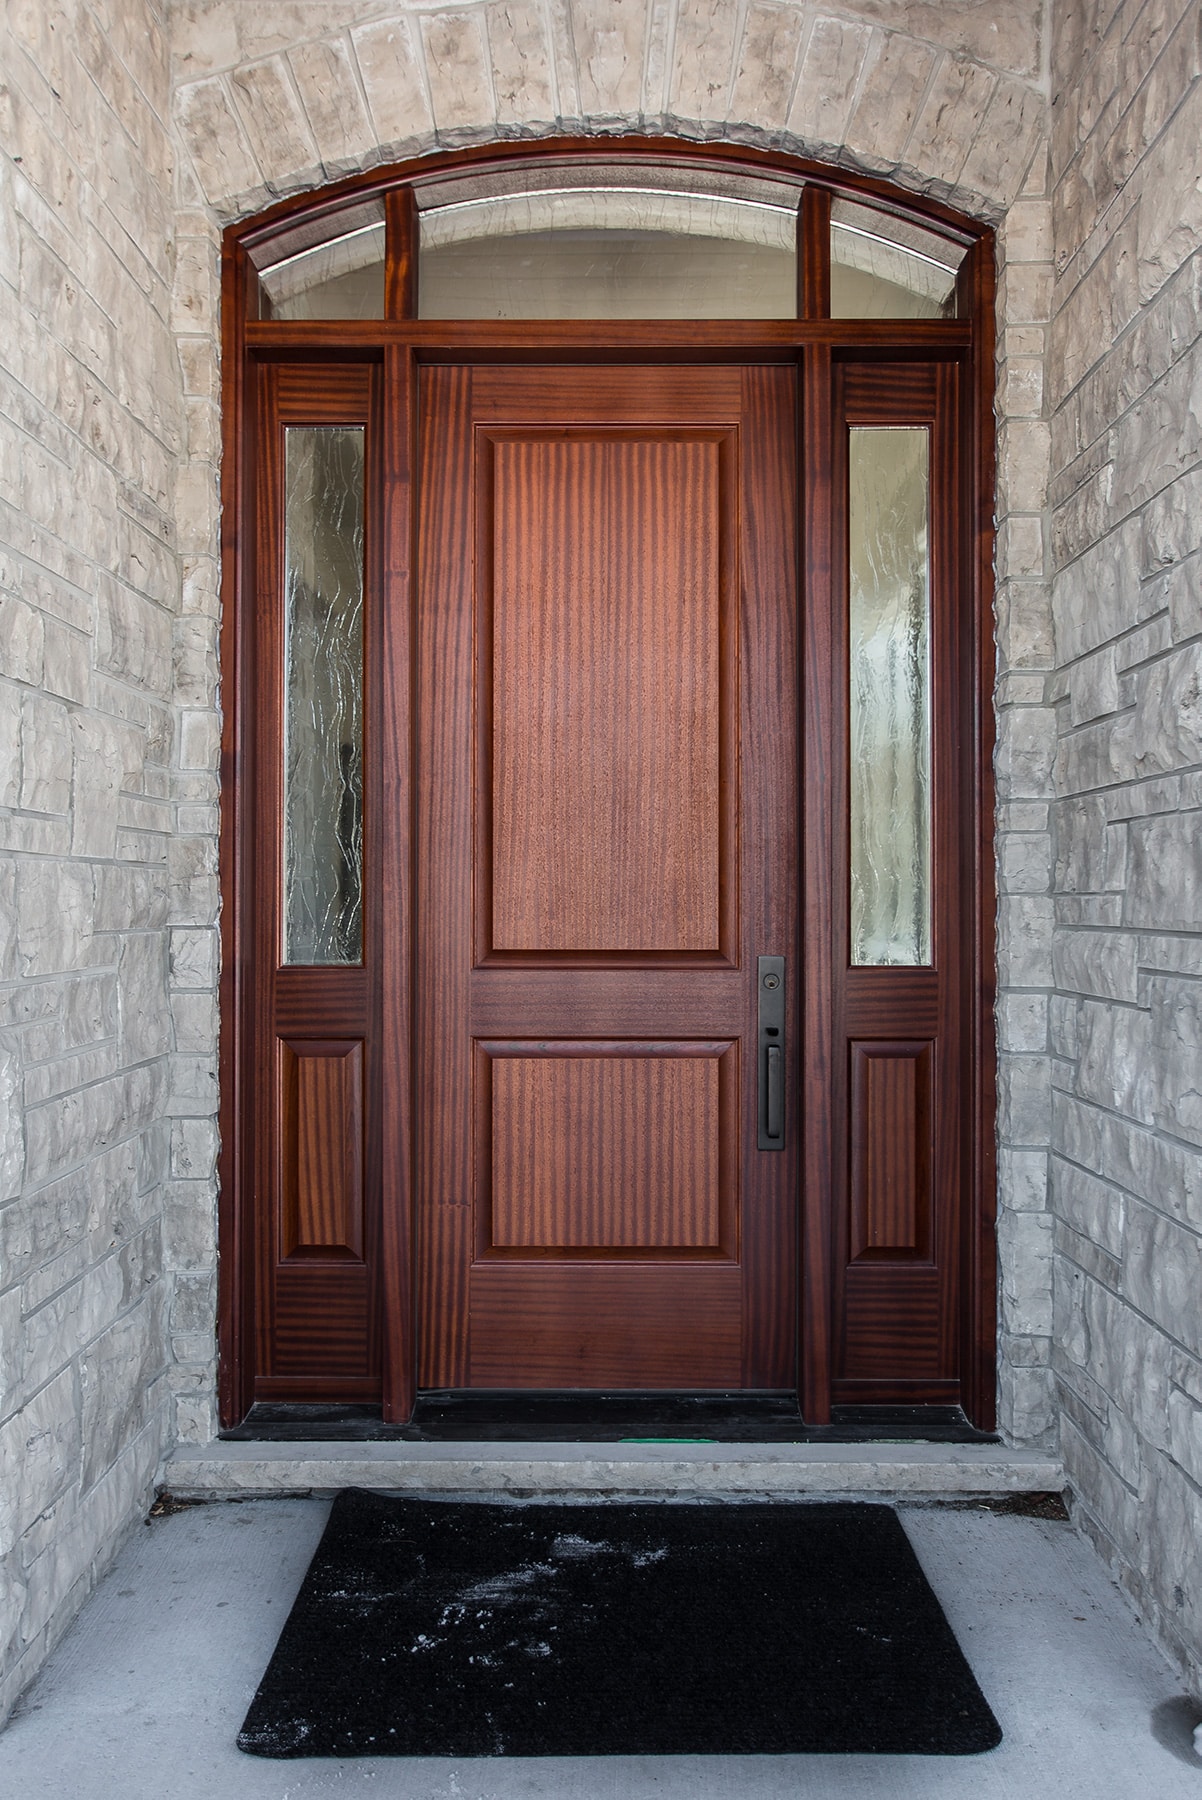 Custom Exterior Doors - Riverside Millwork Group